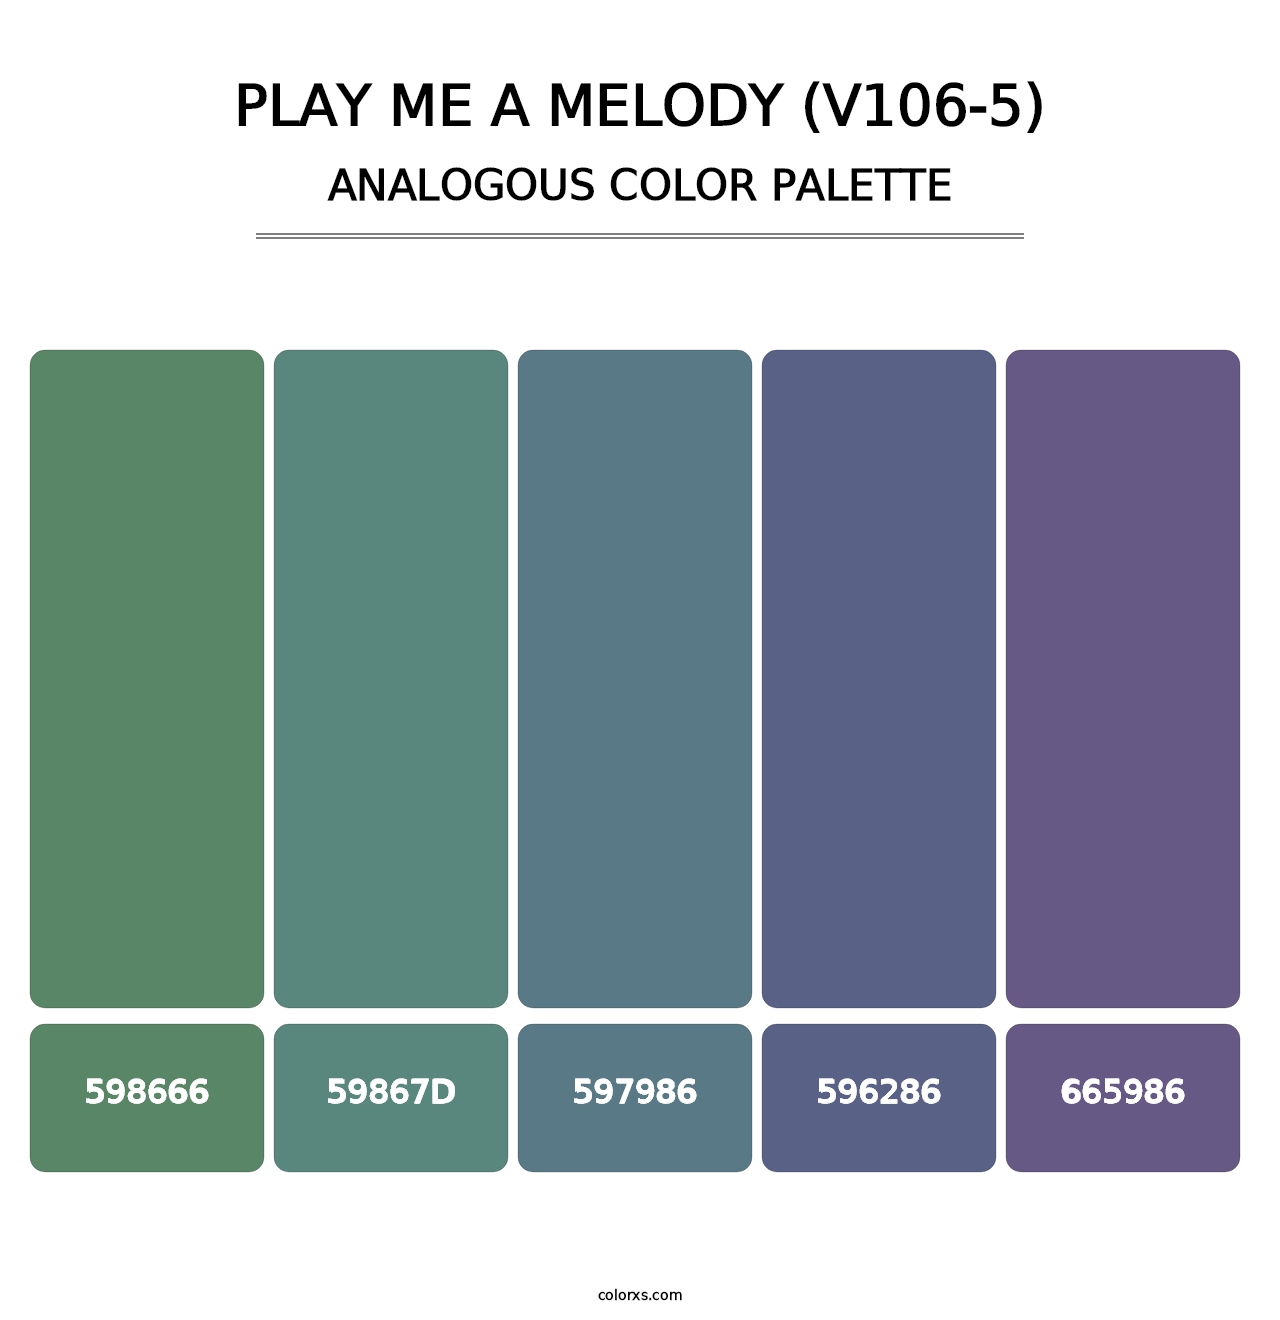 Play Me a Melody (V106-5) - Analogous Color Palette